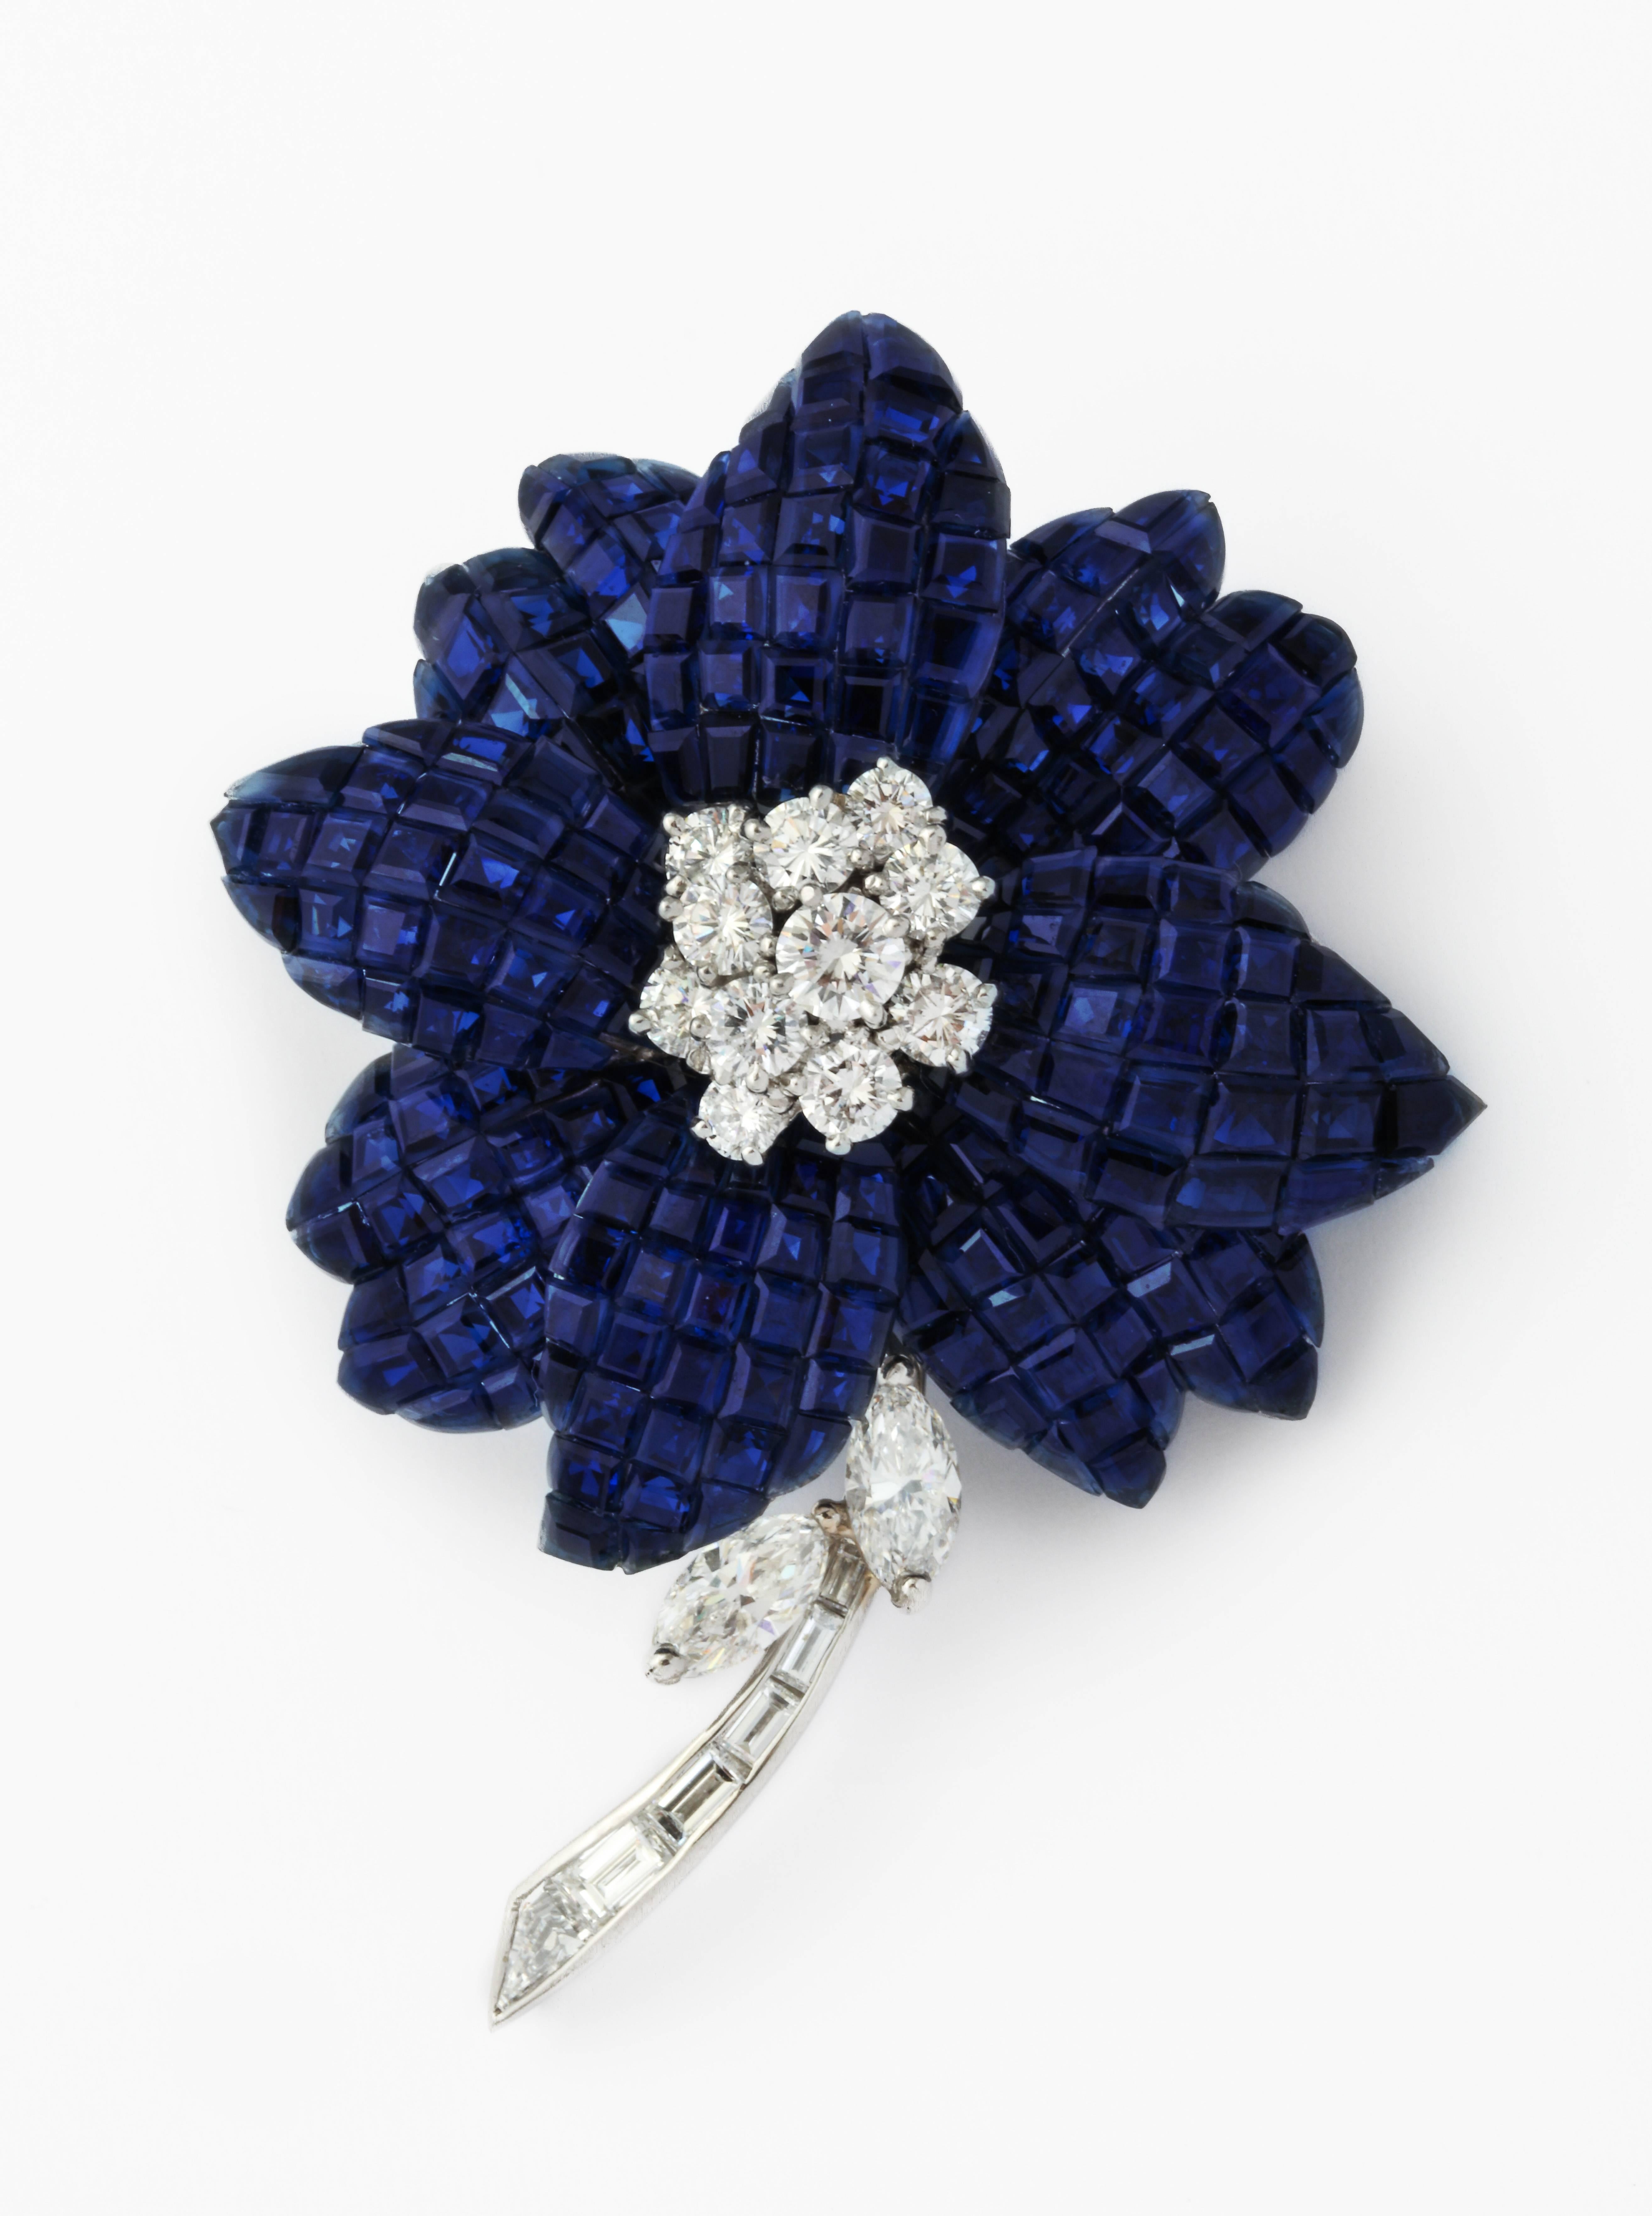 Women's or Men's Van Cleef & Arpels Mystery Set Sapphire and Diamond Brooch and Earrings Set